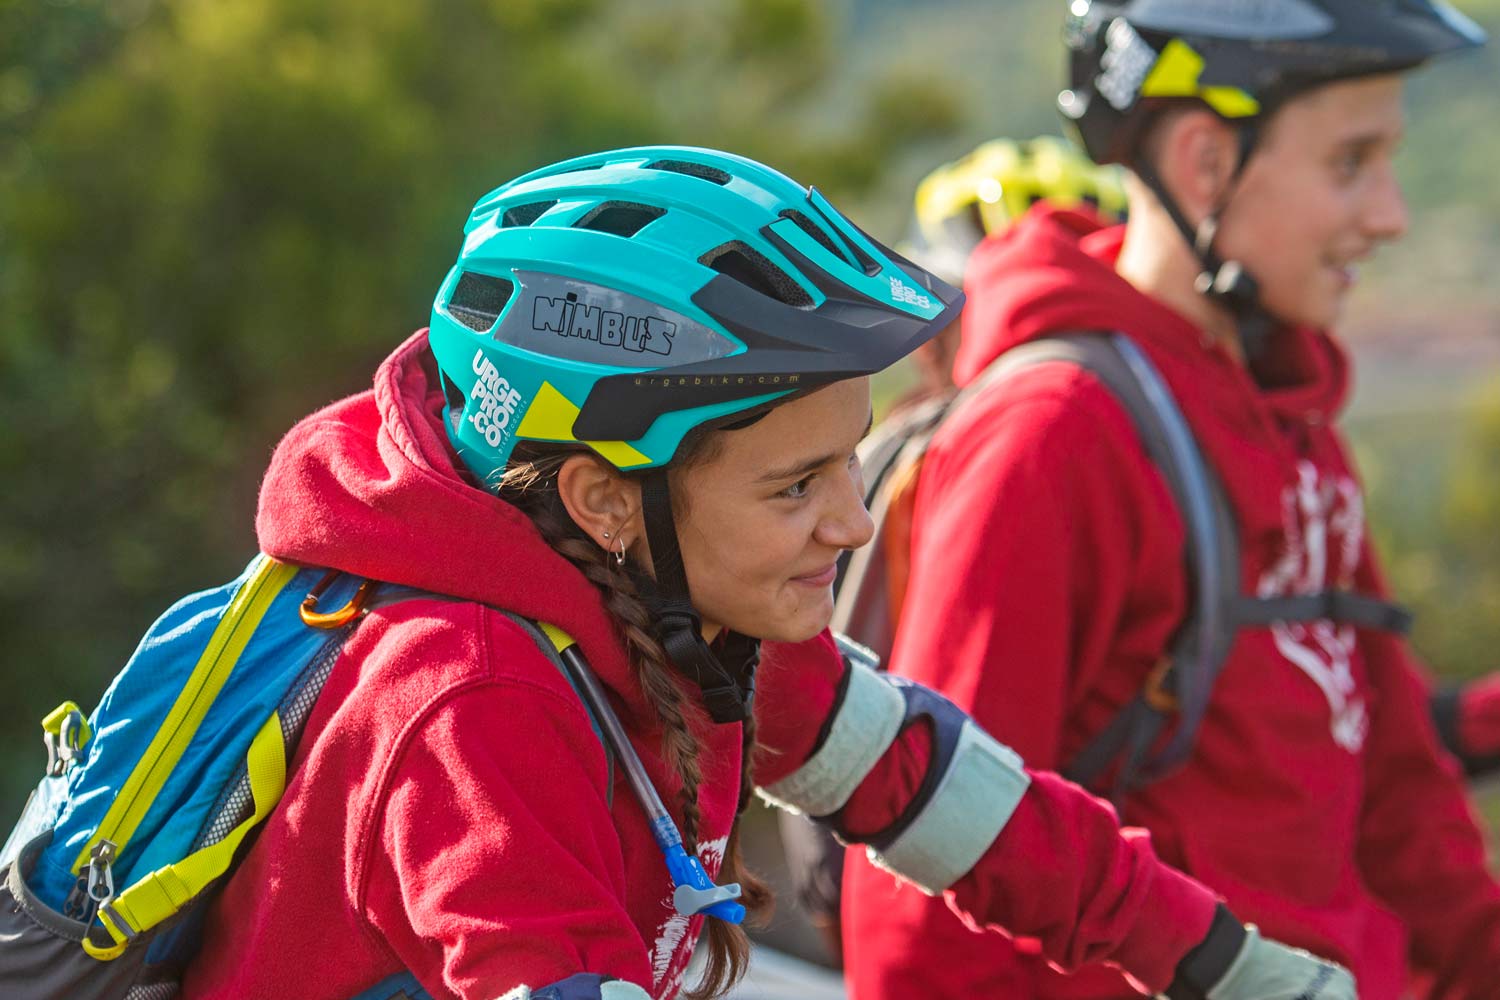 Urge Nimbus kids MTB helmet, affordable child-sized eco-friendly all-trail all-mountain bike head protection